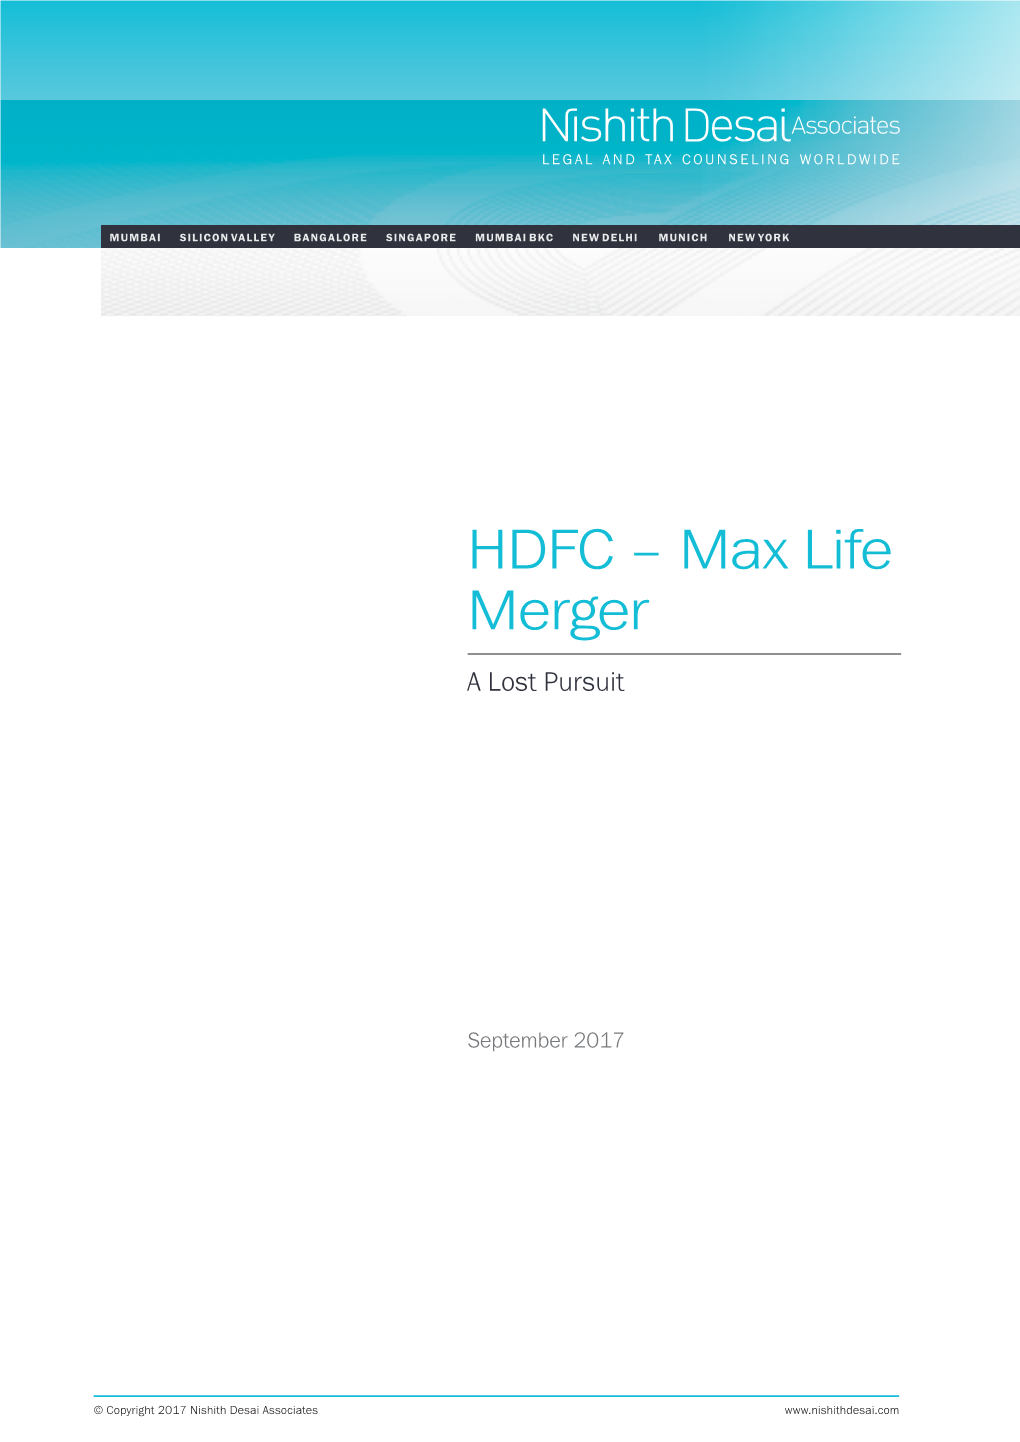 HDFC – Max Life Merger a Lost Pursuit